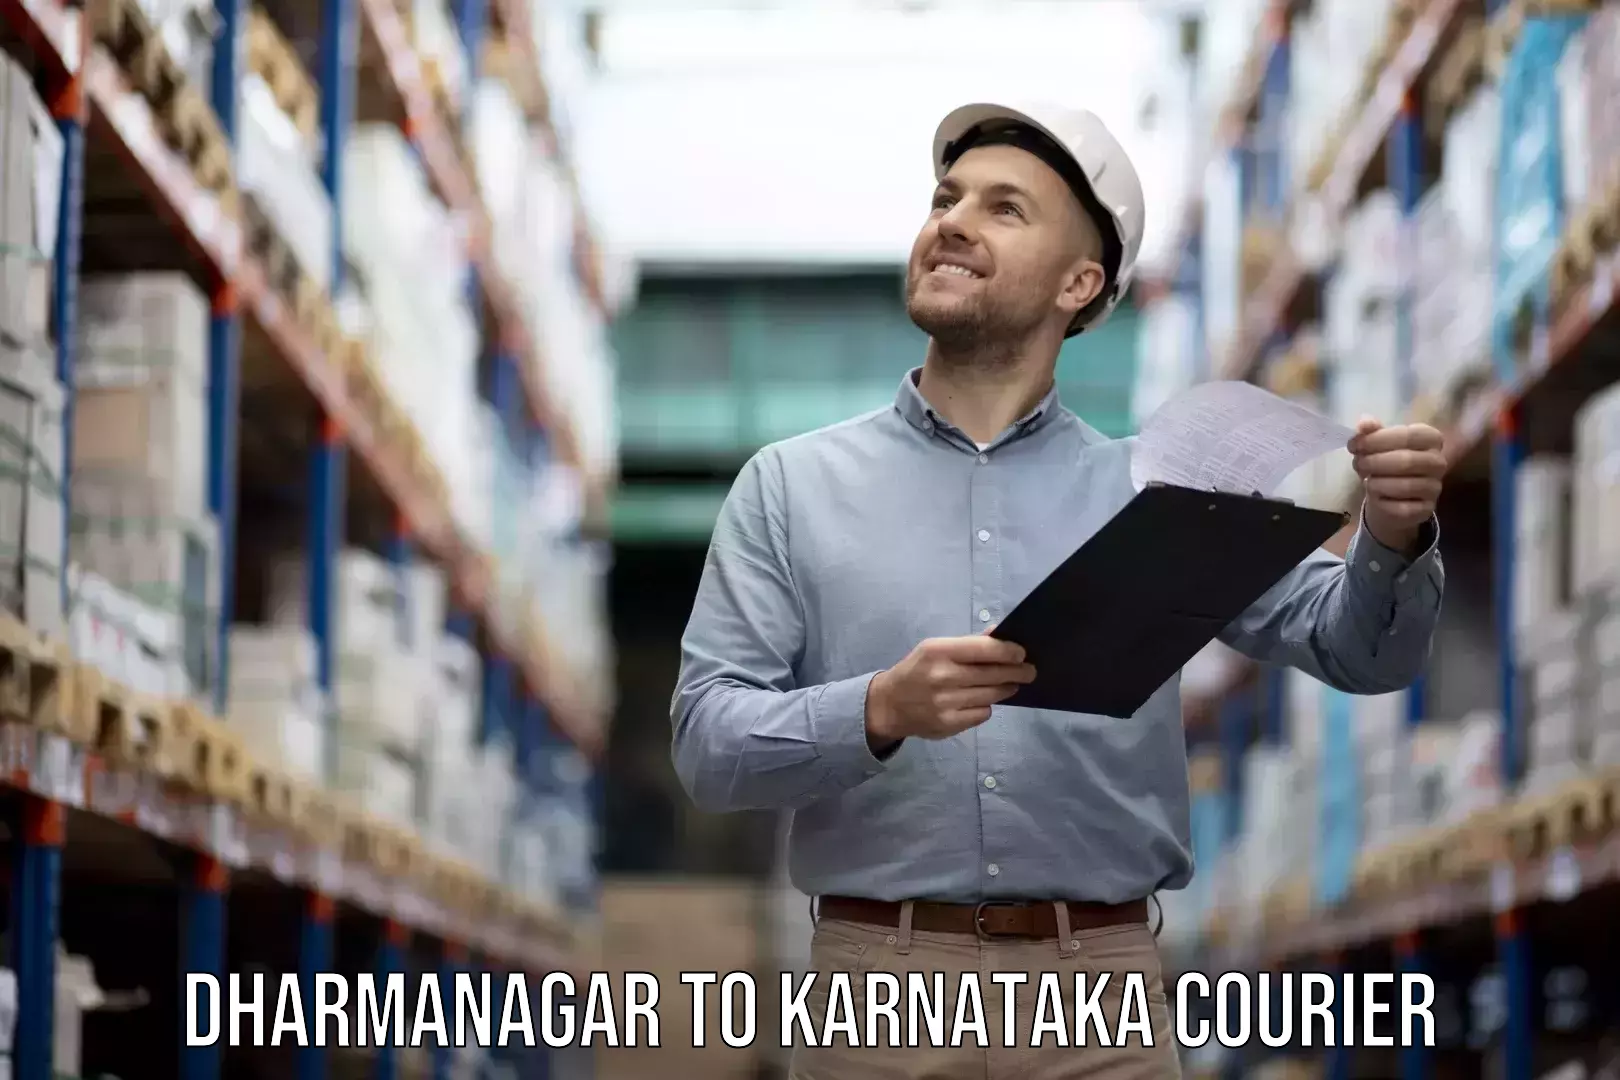 Specialized moving company Dharmanagar to Karnataka